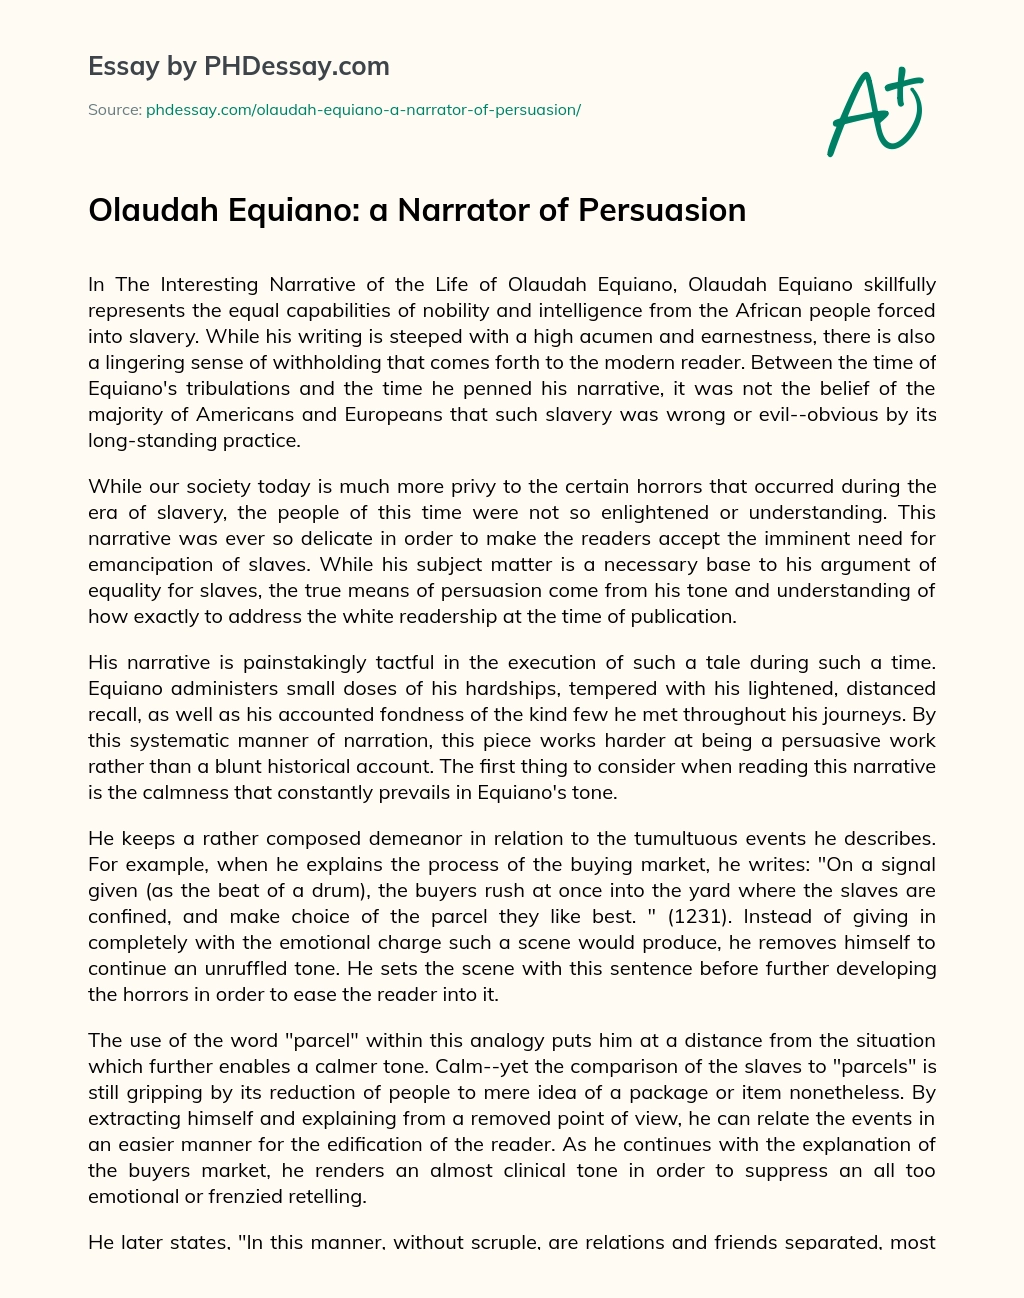 Olaudah Equiano: a Narrator of Persuasion essay